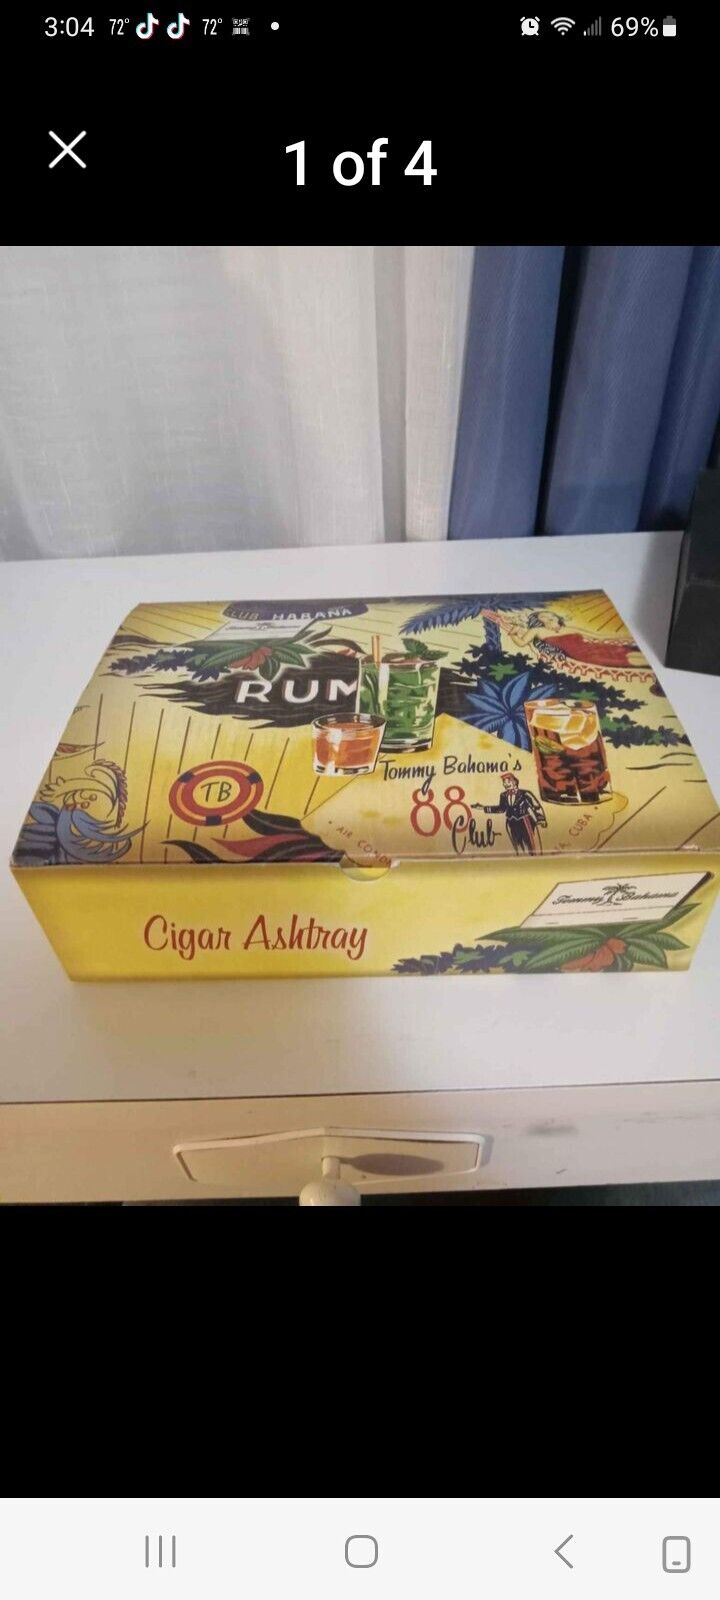 Tommy Bahama\'s 88 club Cigar Ashtray in Original Box